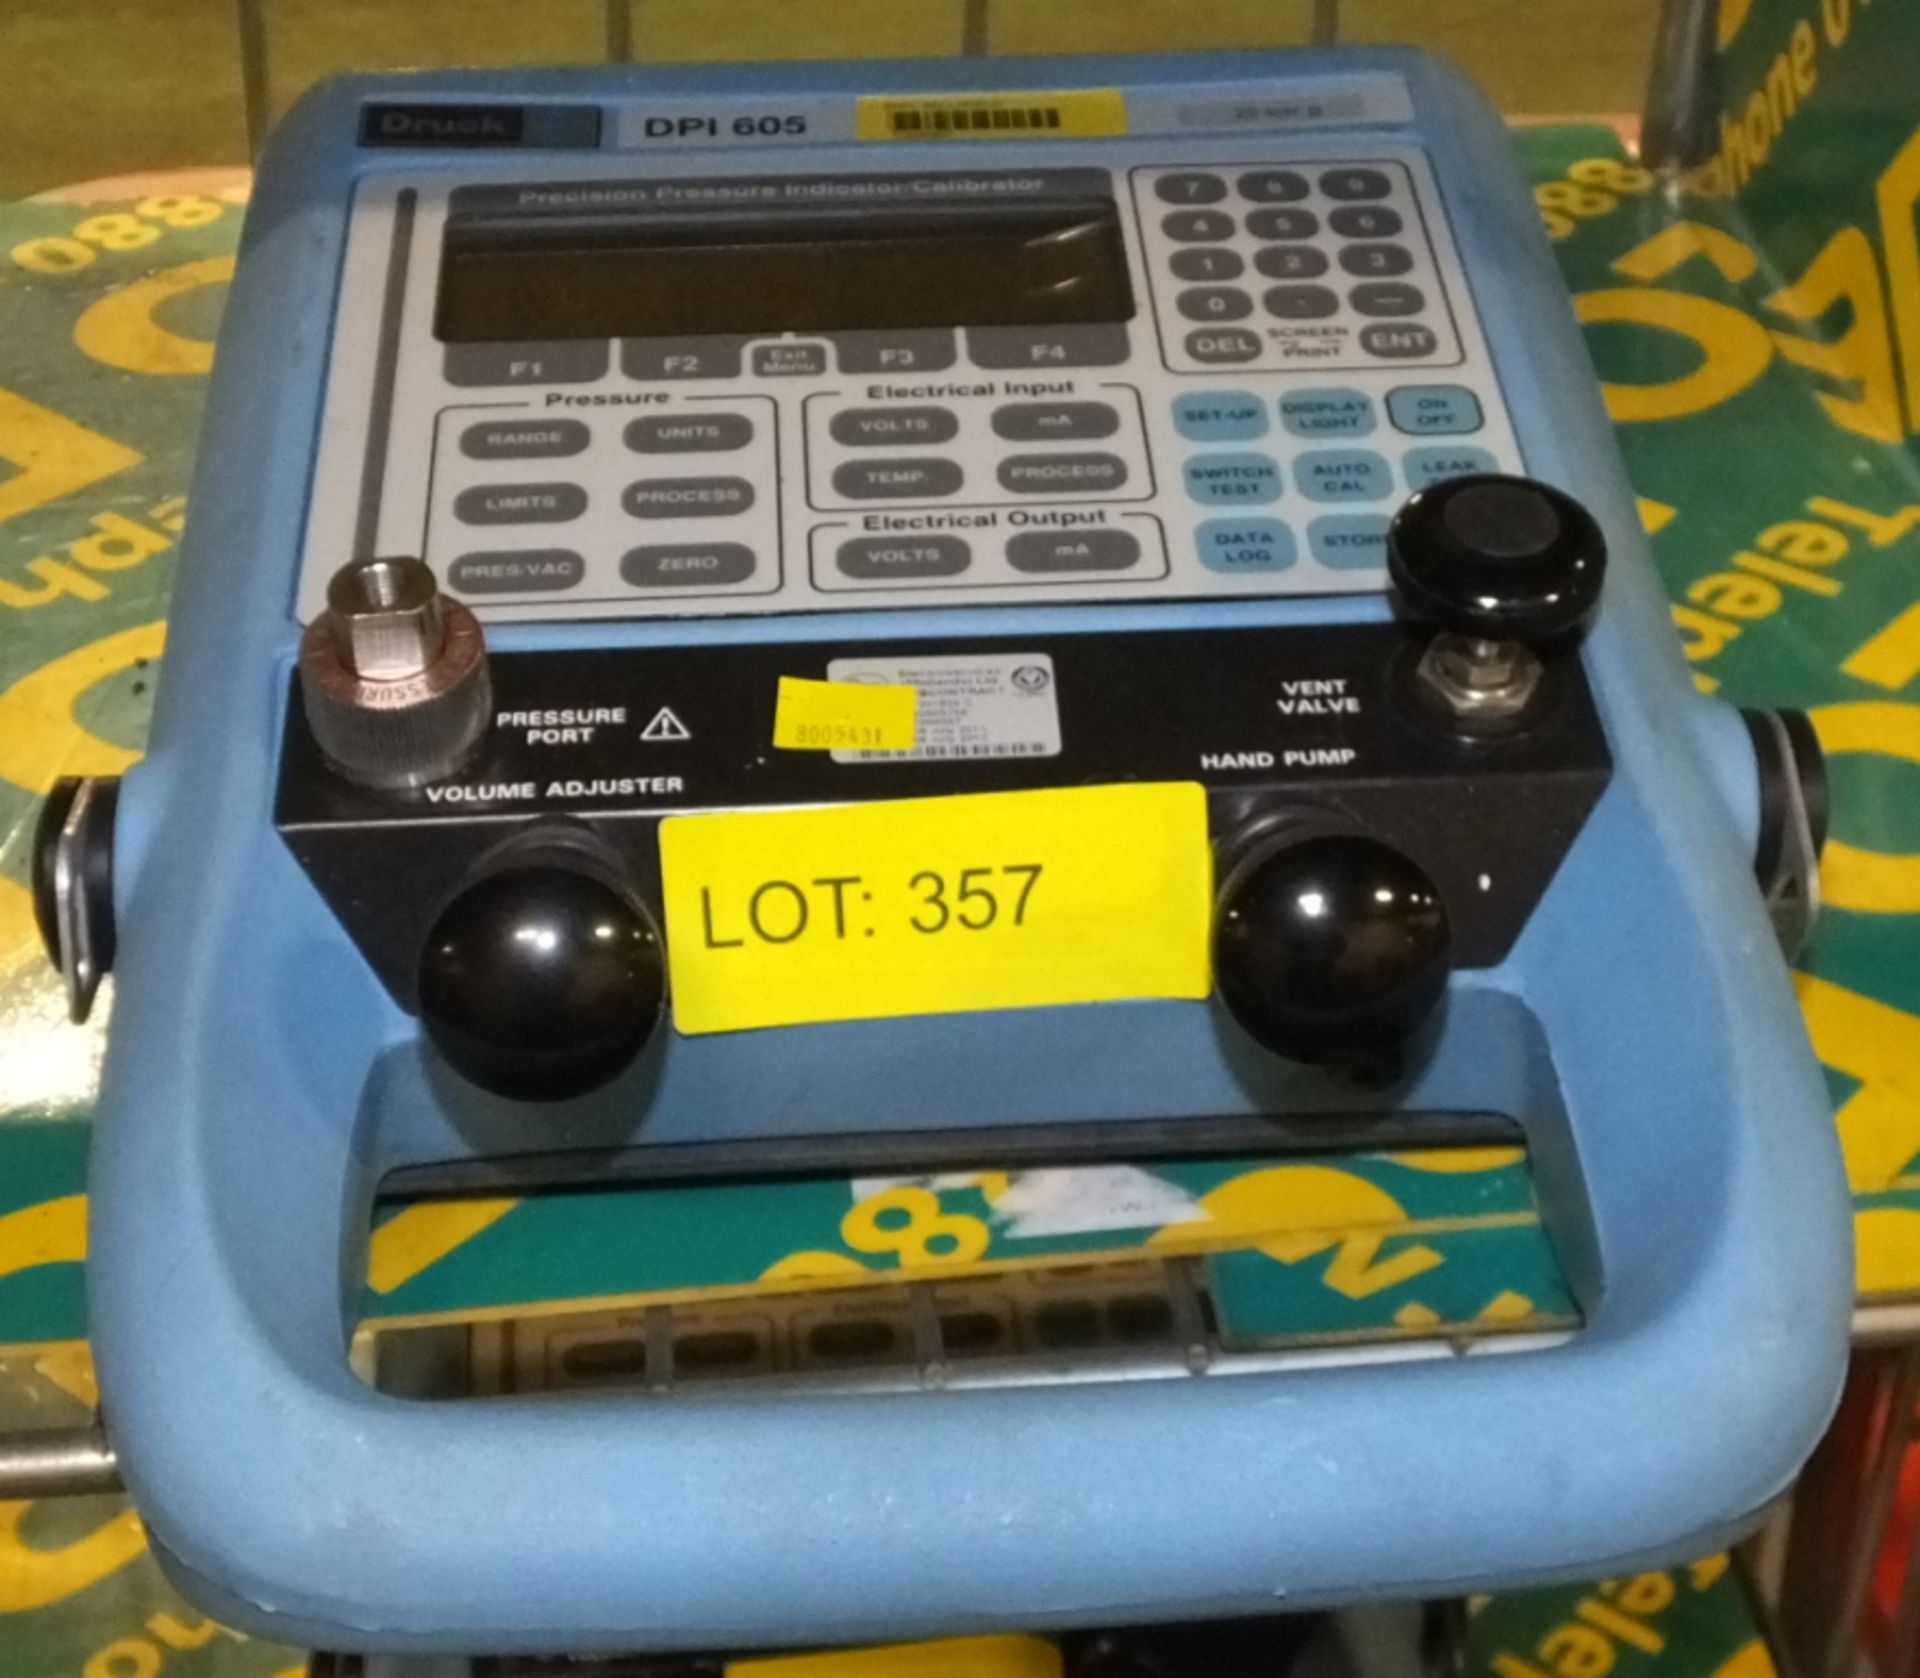 Druck DPI 605 20bar G digital pressure indicator